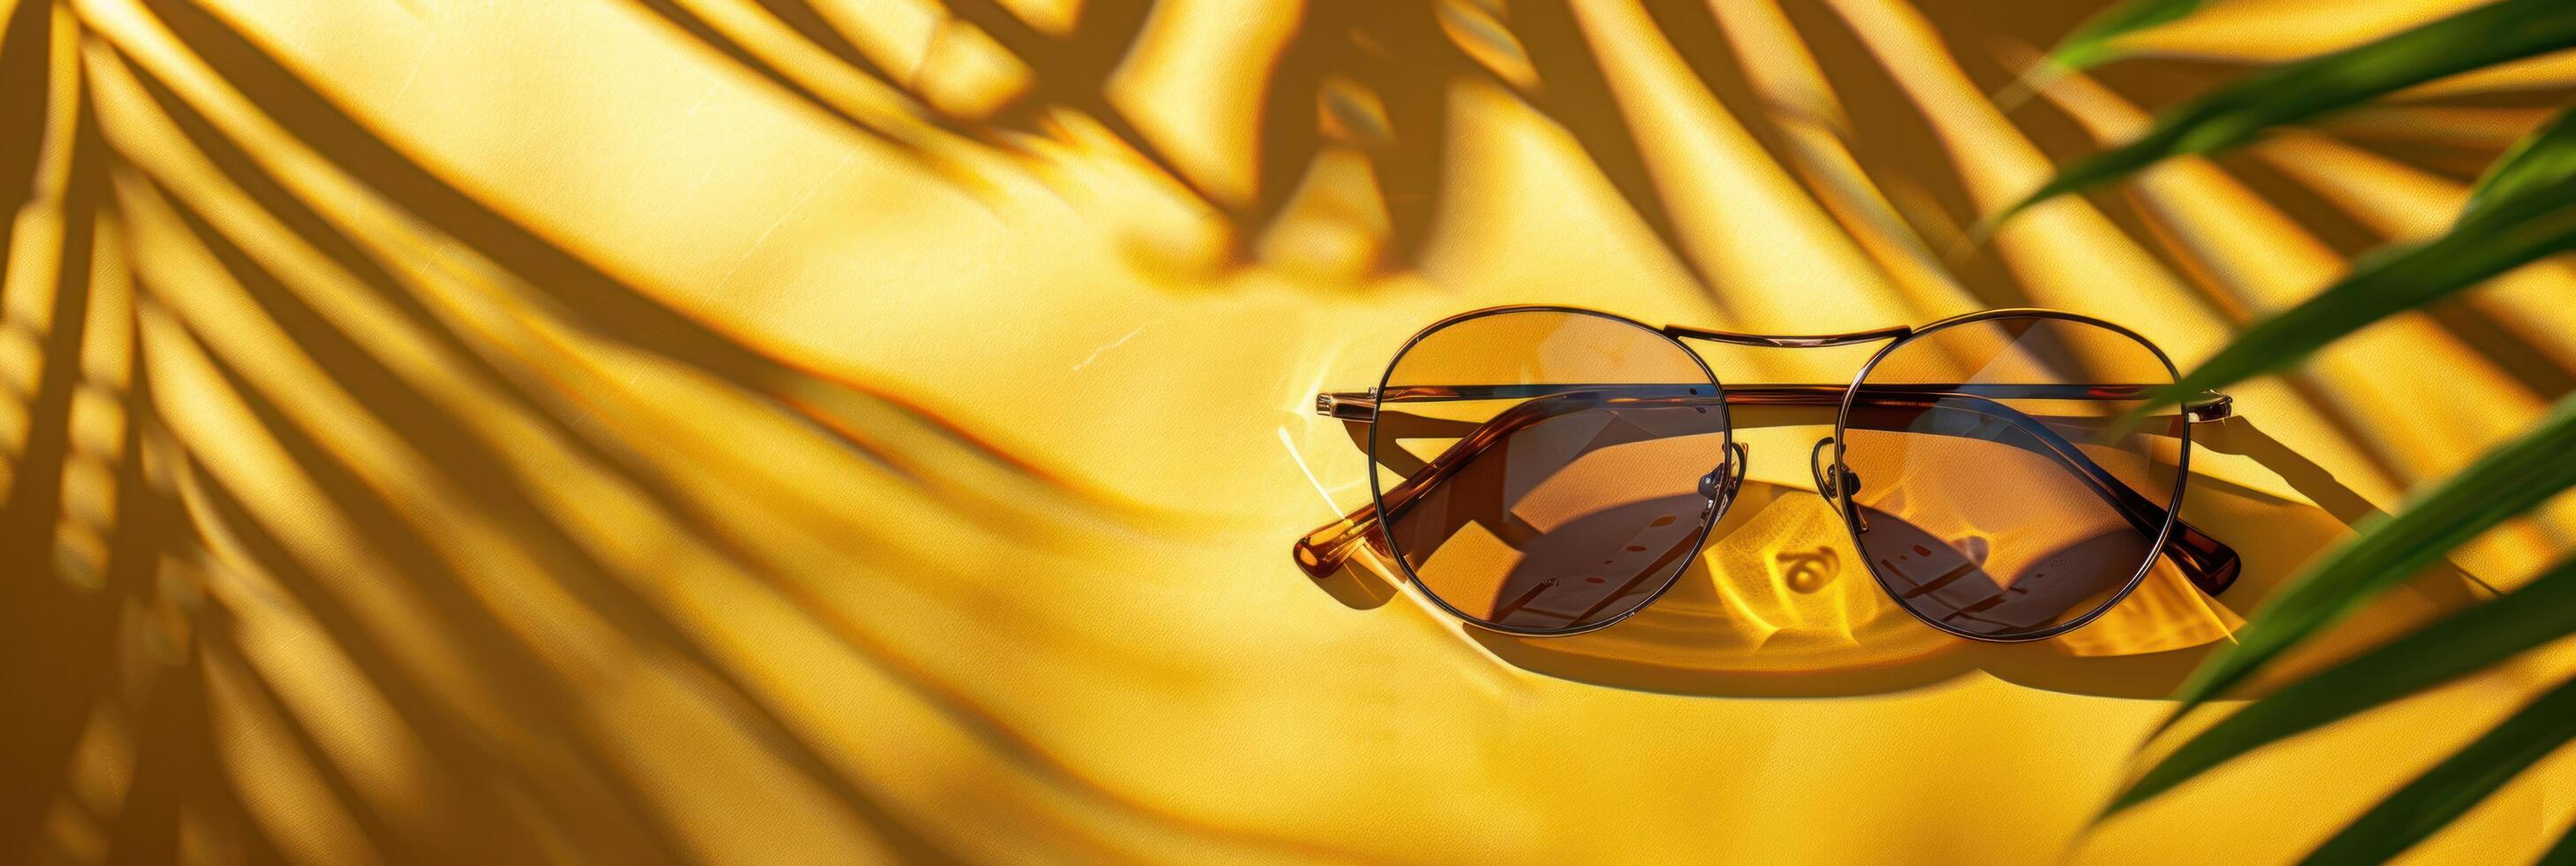 ai gegenereerd zomer zonlicht afgietsels palm blad schaduwen over- zomer zonnebril Aan een zonnig geel achtergrond foto